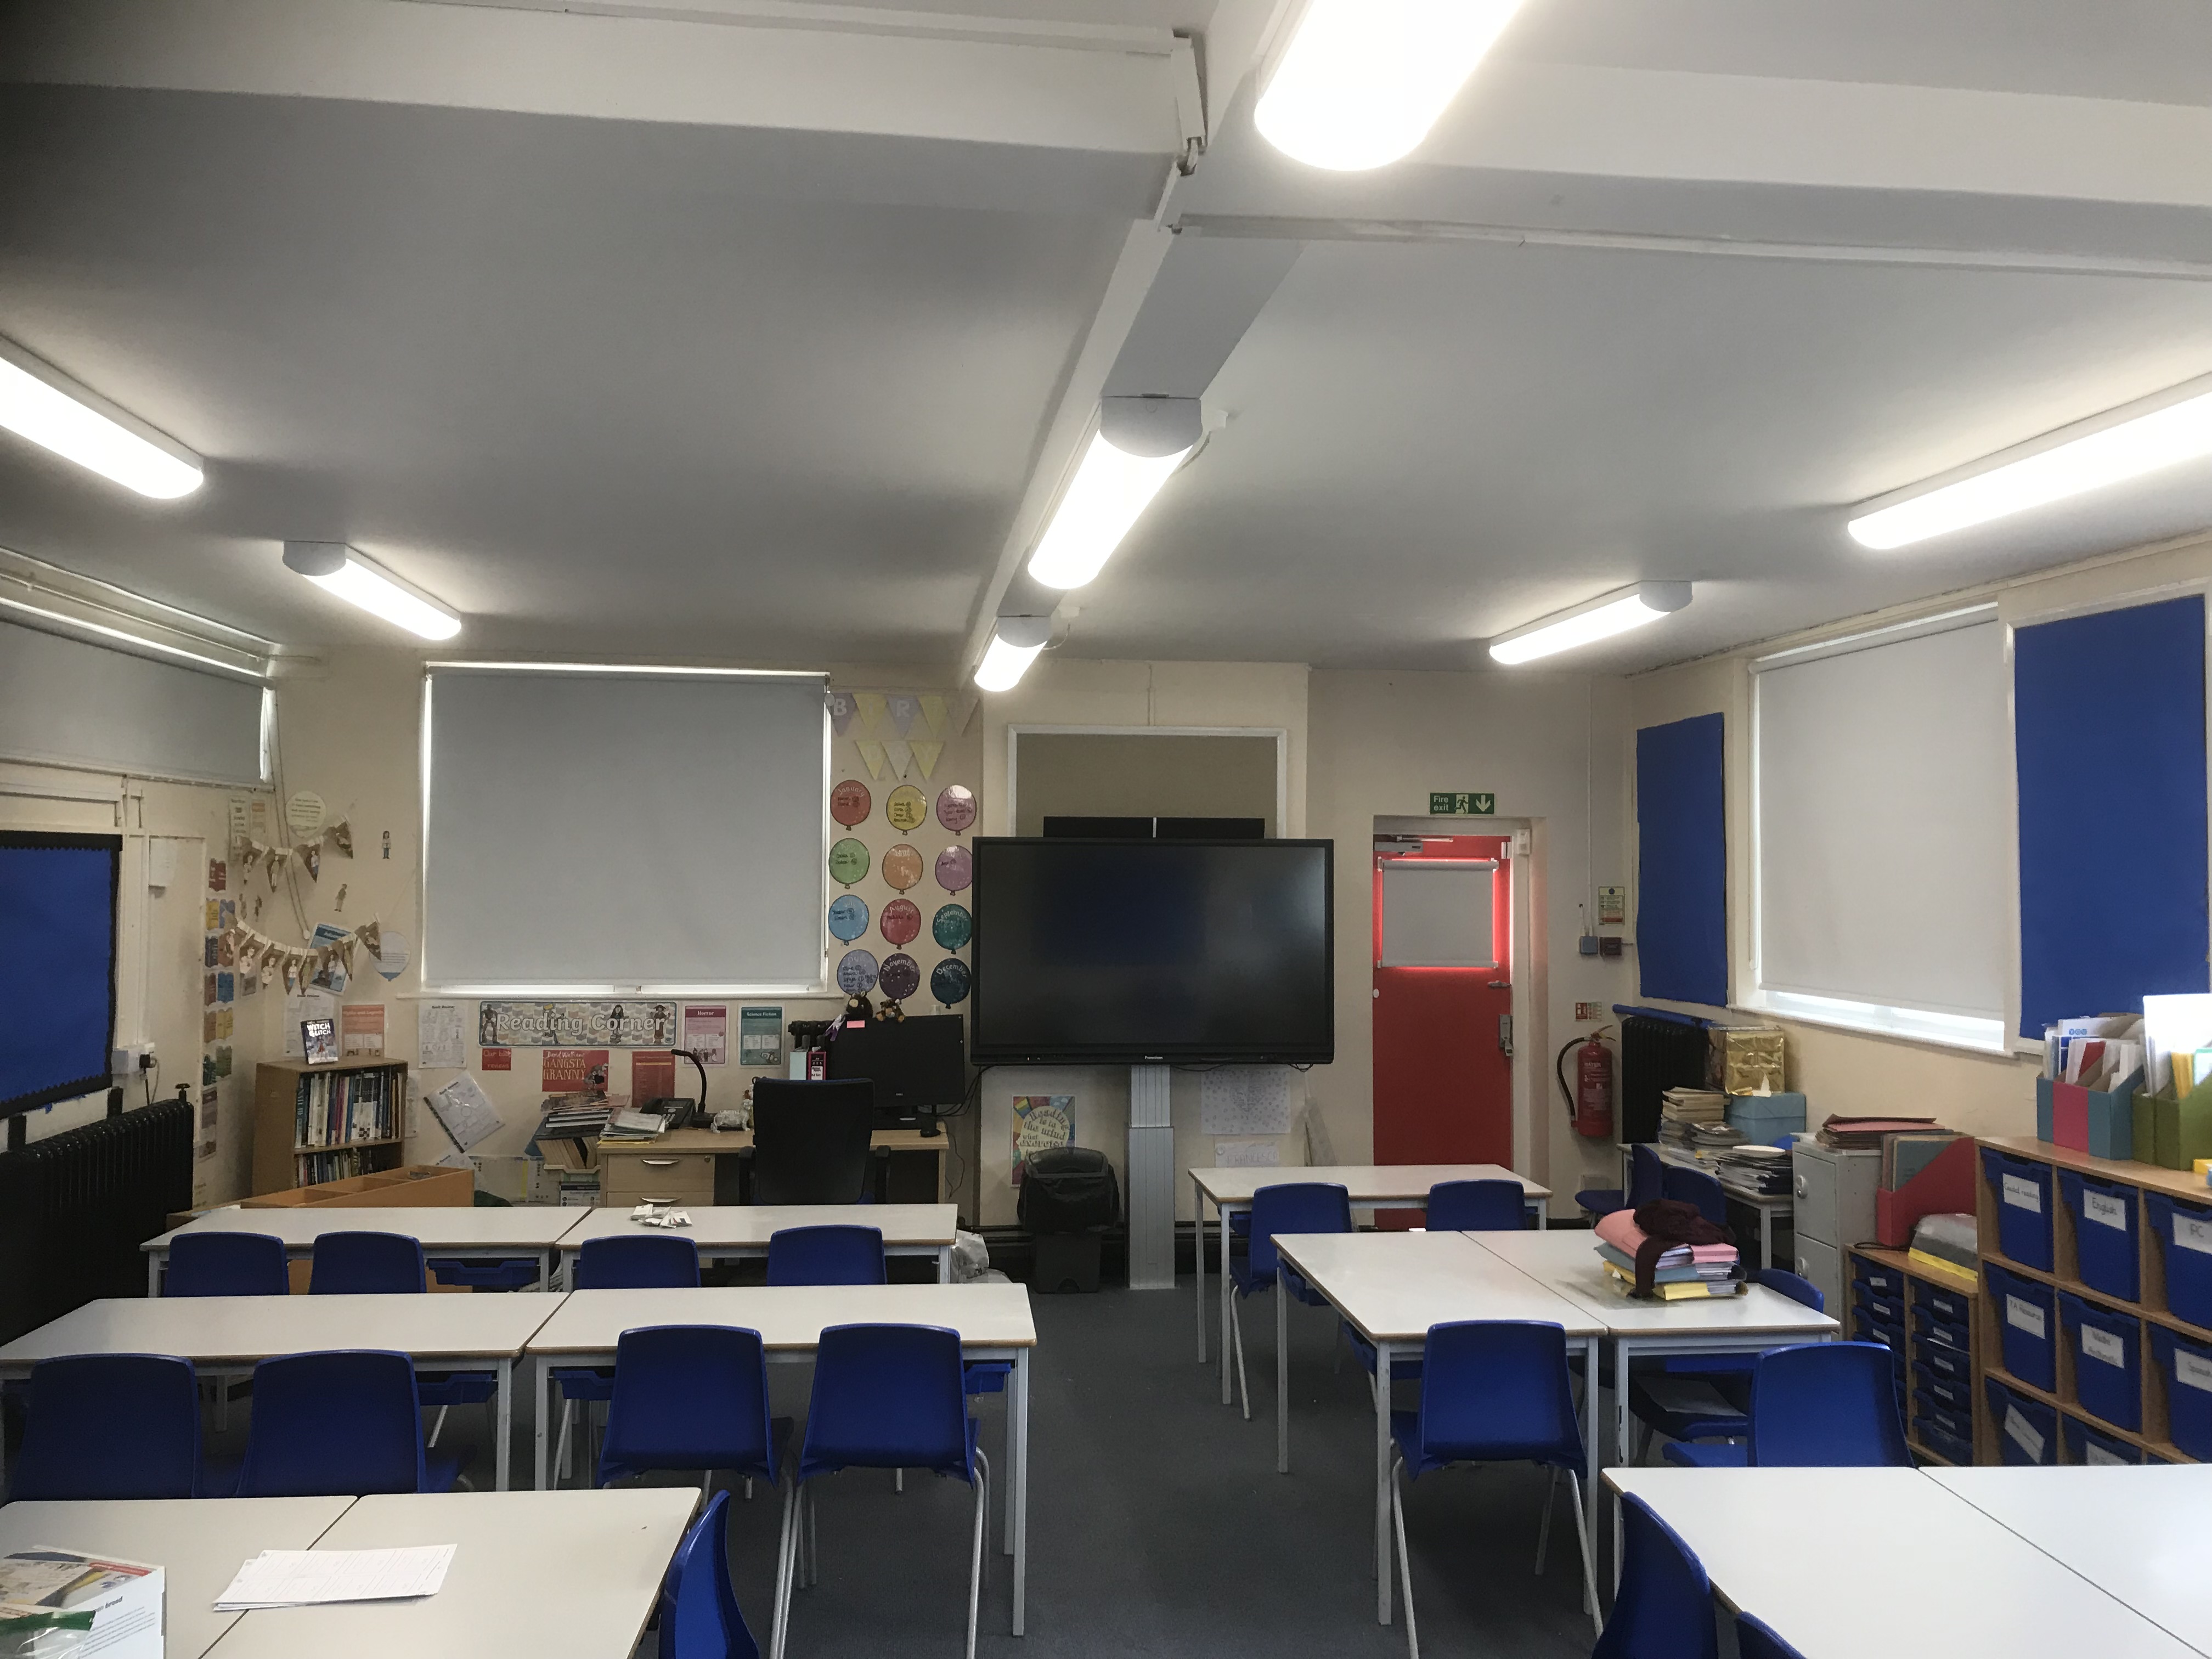 LED lighting battens in a school classroom